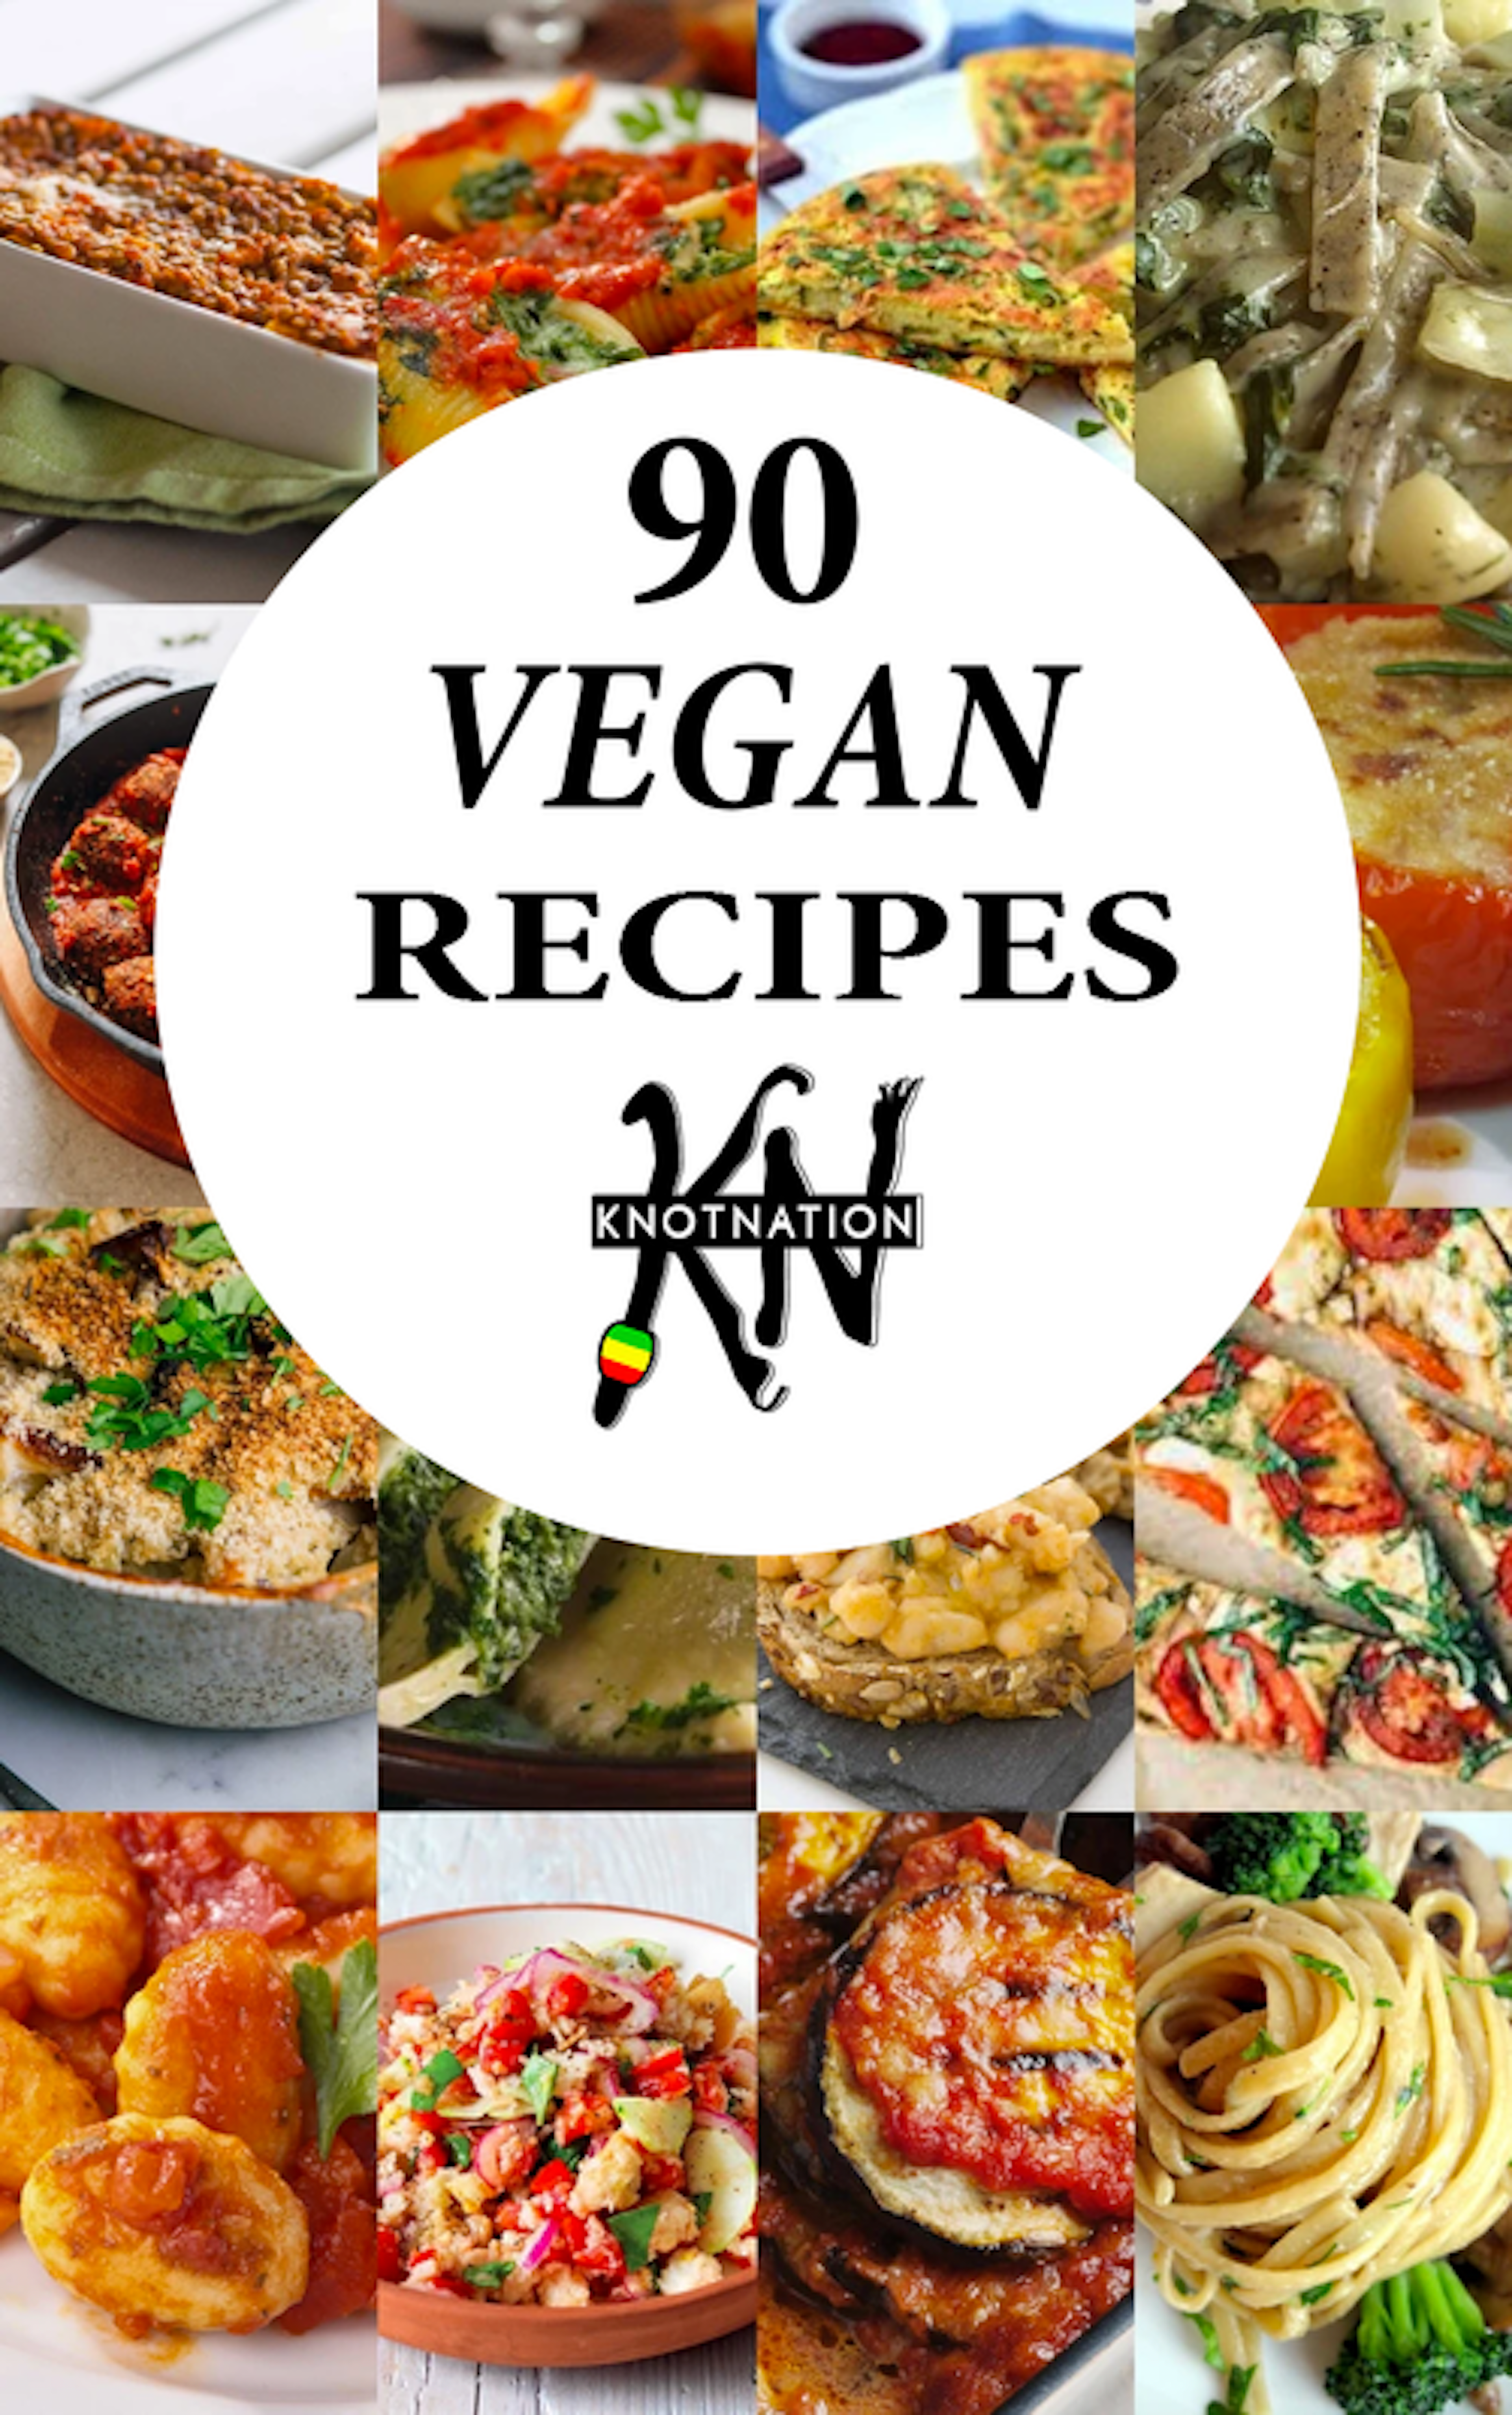 90 Vegan Recipes from KNOT